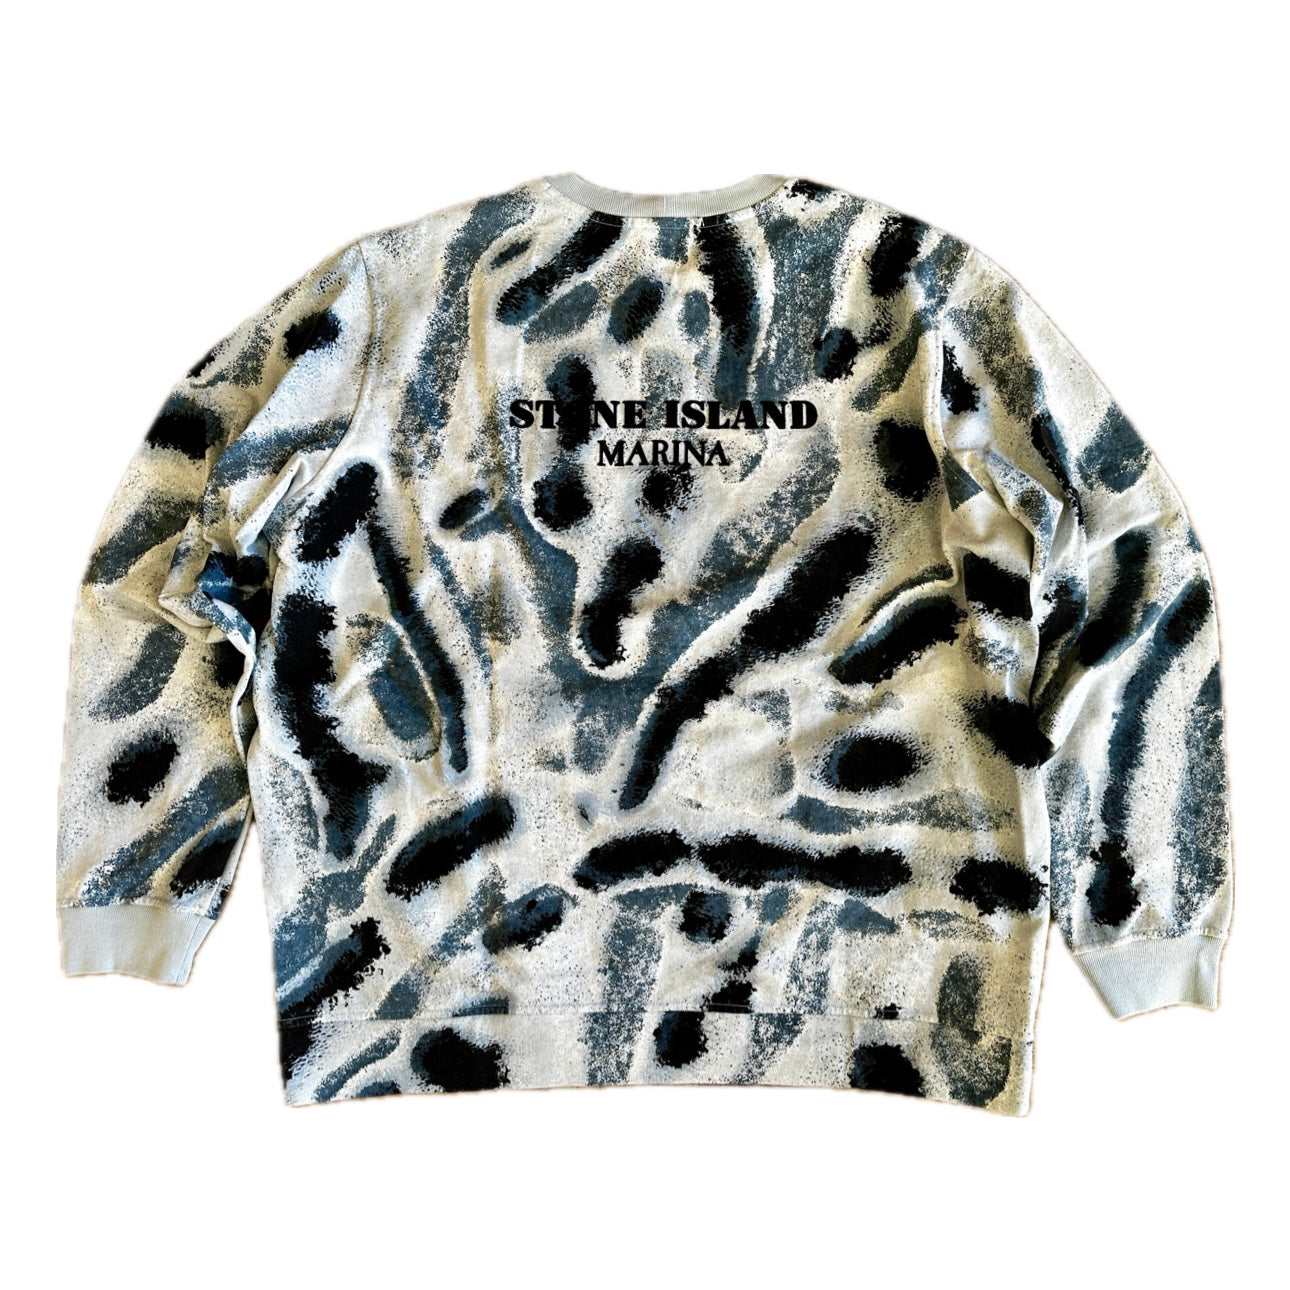 Stone Island Marina 2022 Cotton Fleece Reef Camo Sweatshirt - XXL - Made in Italy